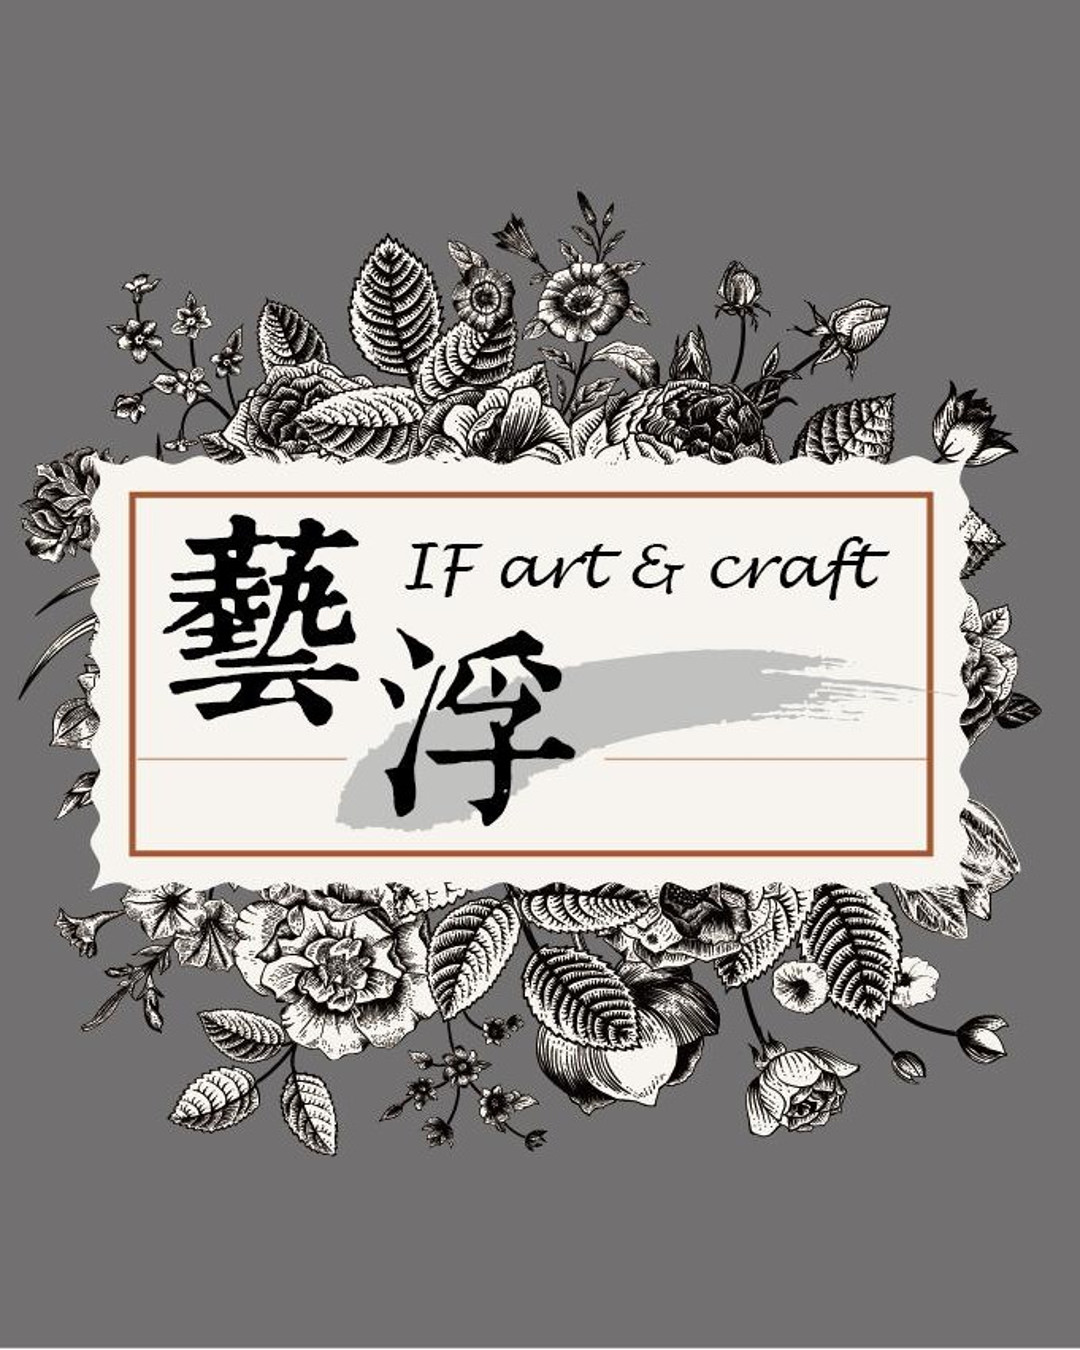  IF art & craft